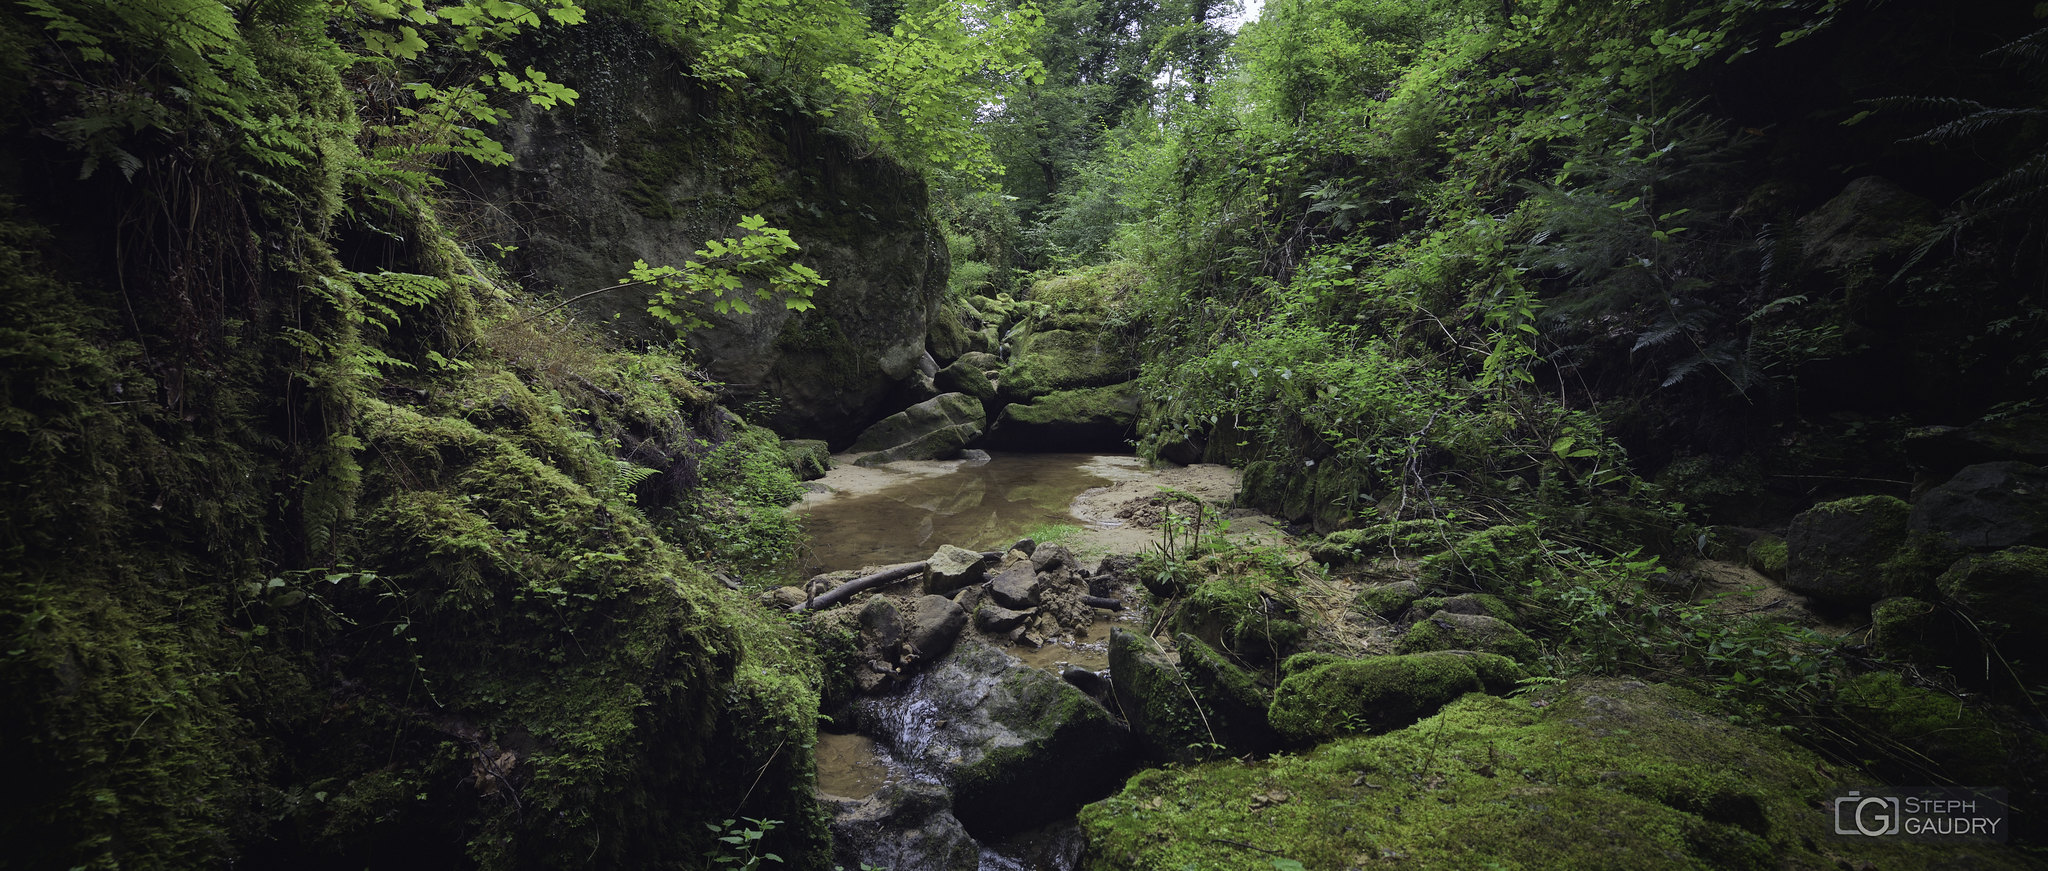 Berdorf - Mullerthal trail [Click to start slideshow]